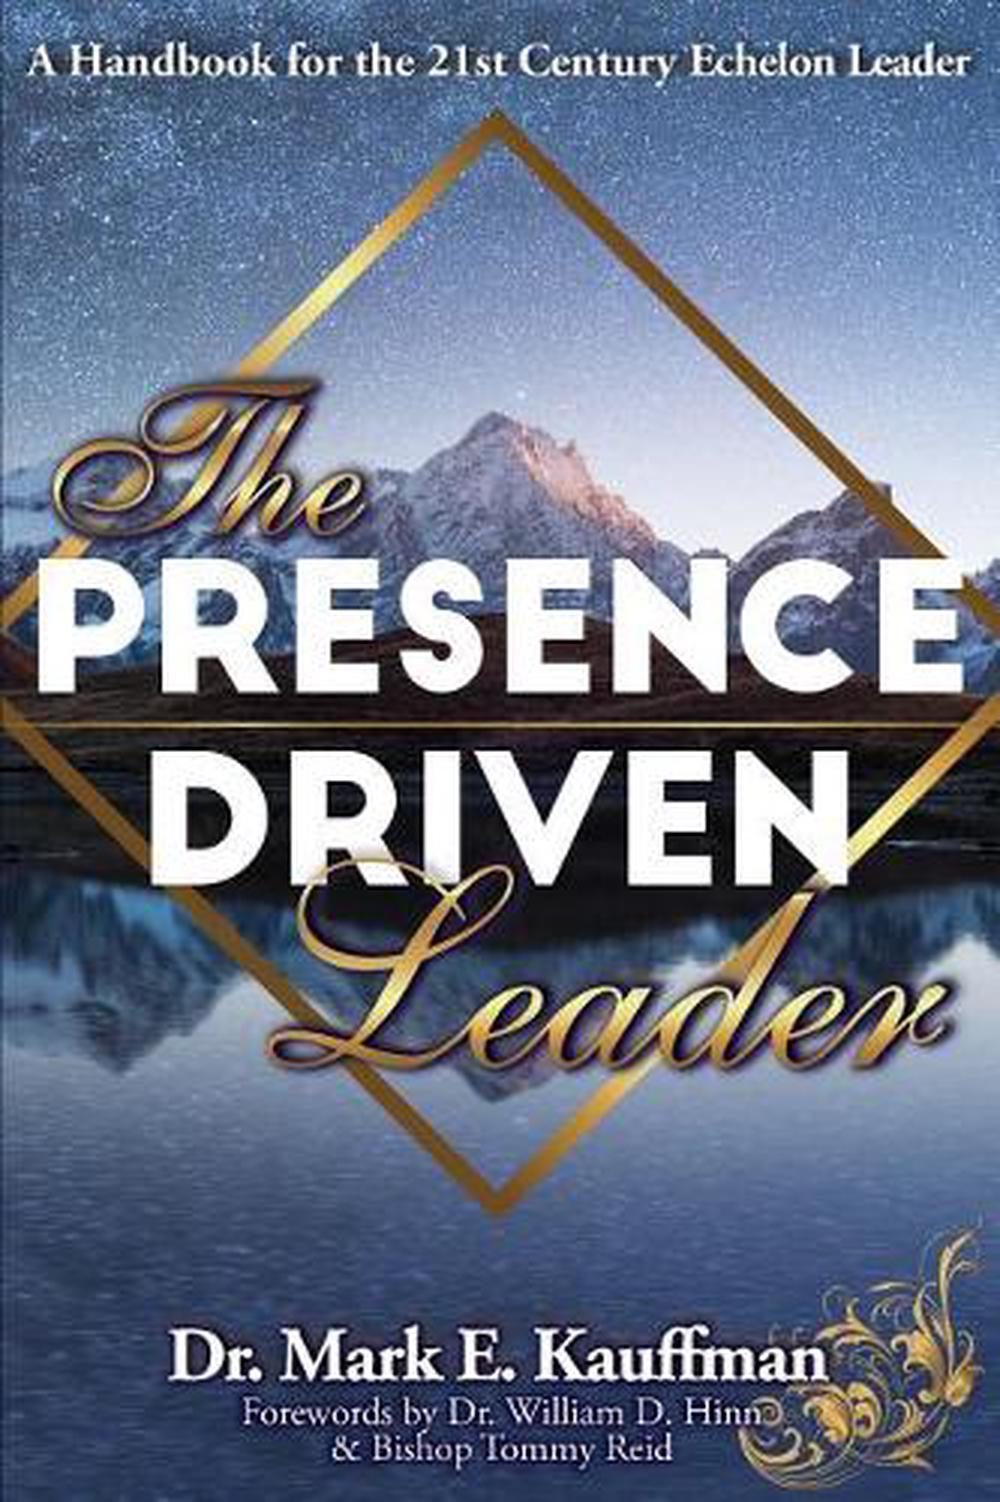 The Presence Driven Leader: A Handbook for the 21st Century Echelon ...